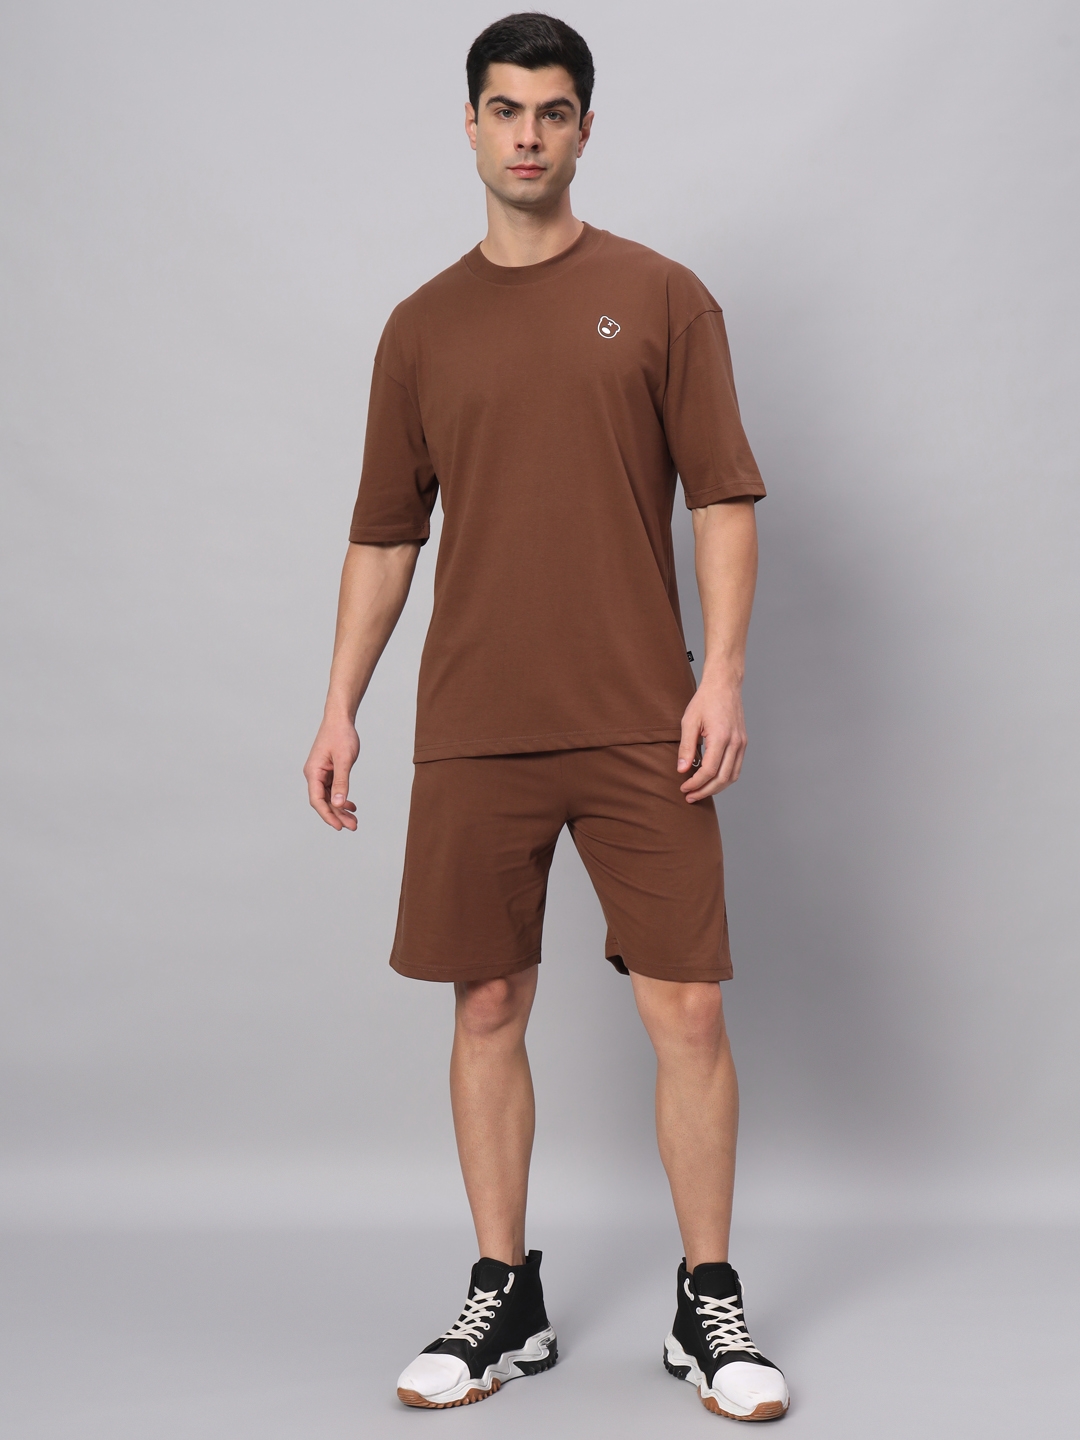 Men's Brown Cotton Loose Printed   Activewear T-Shirts